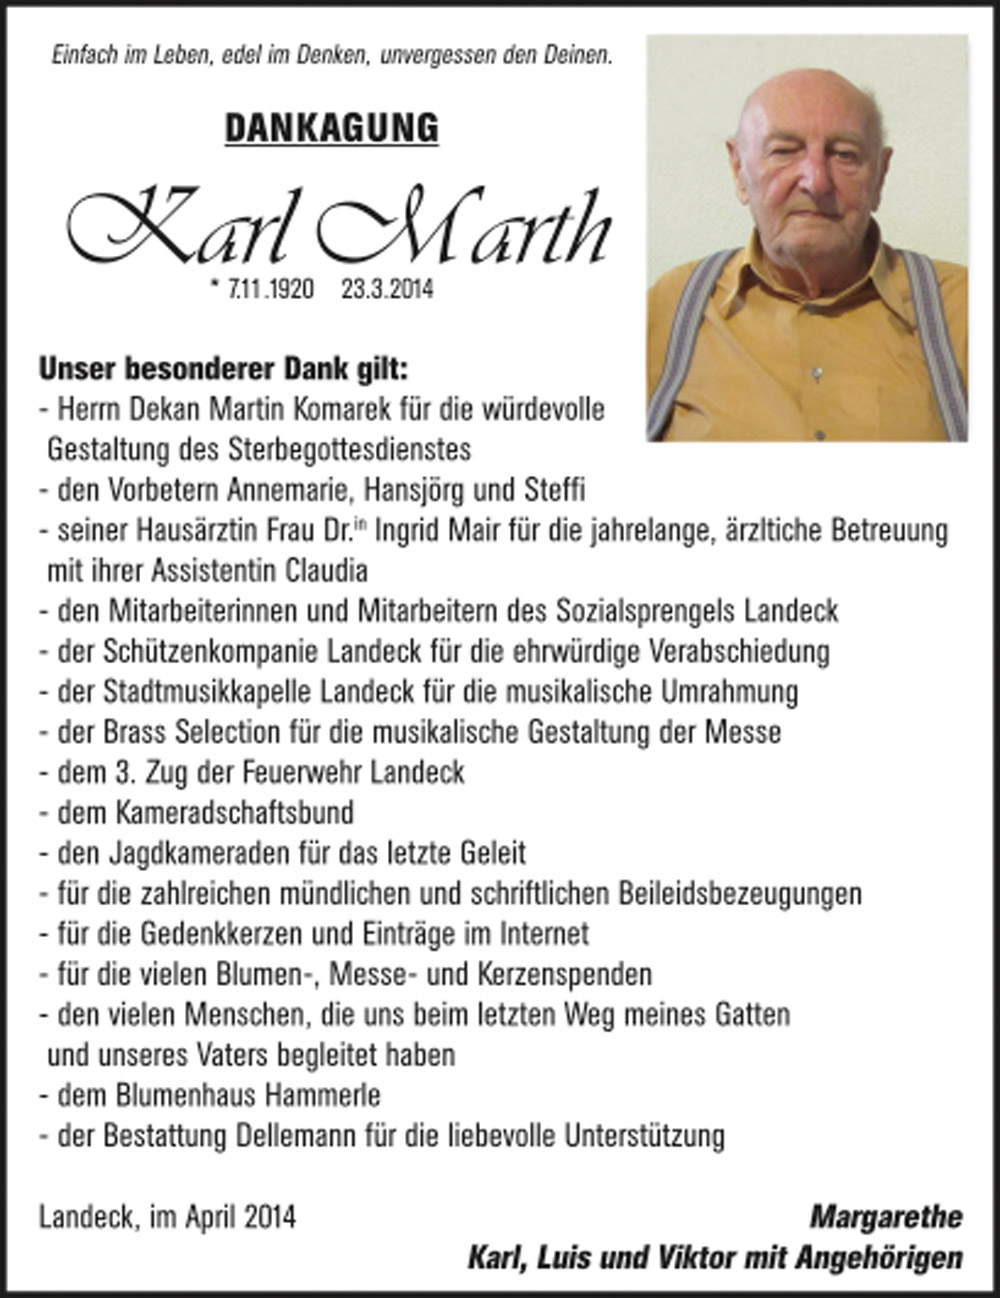 Karl Marth 